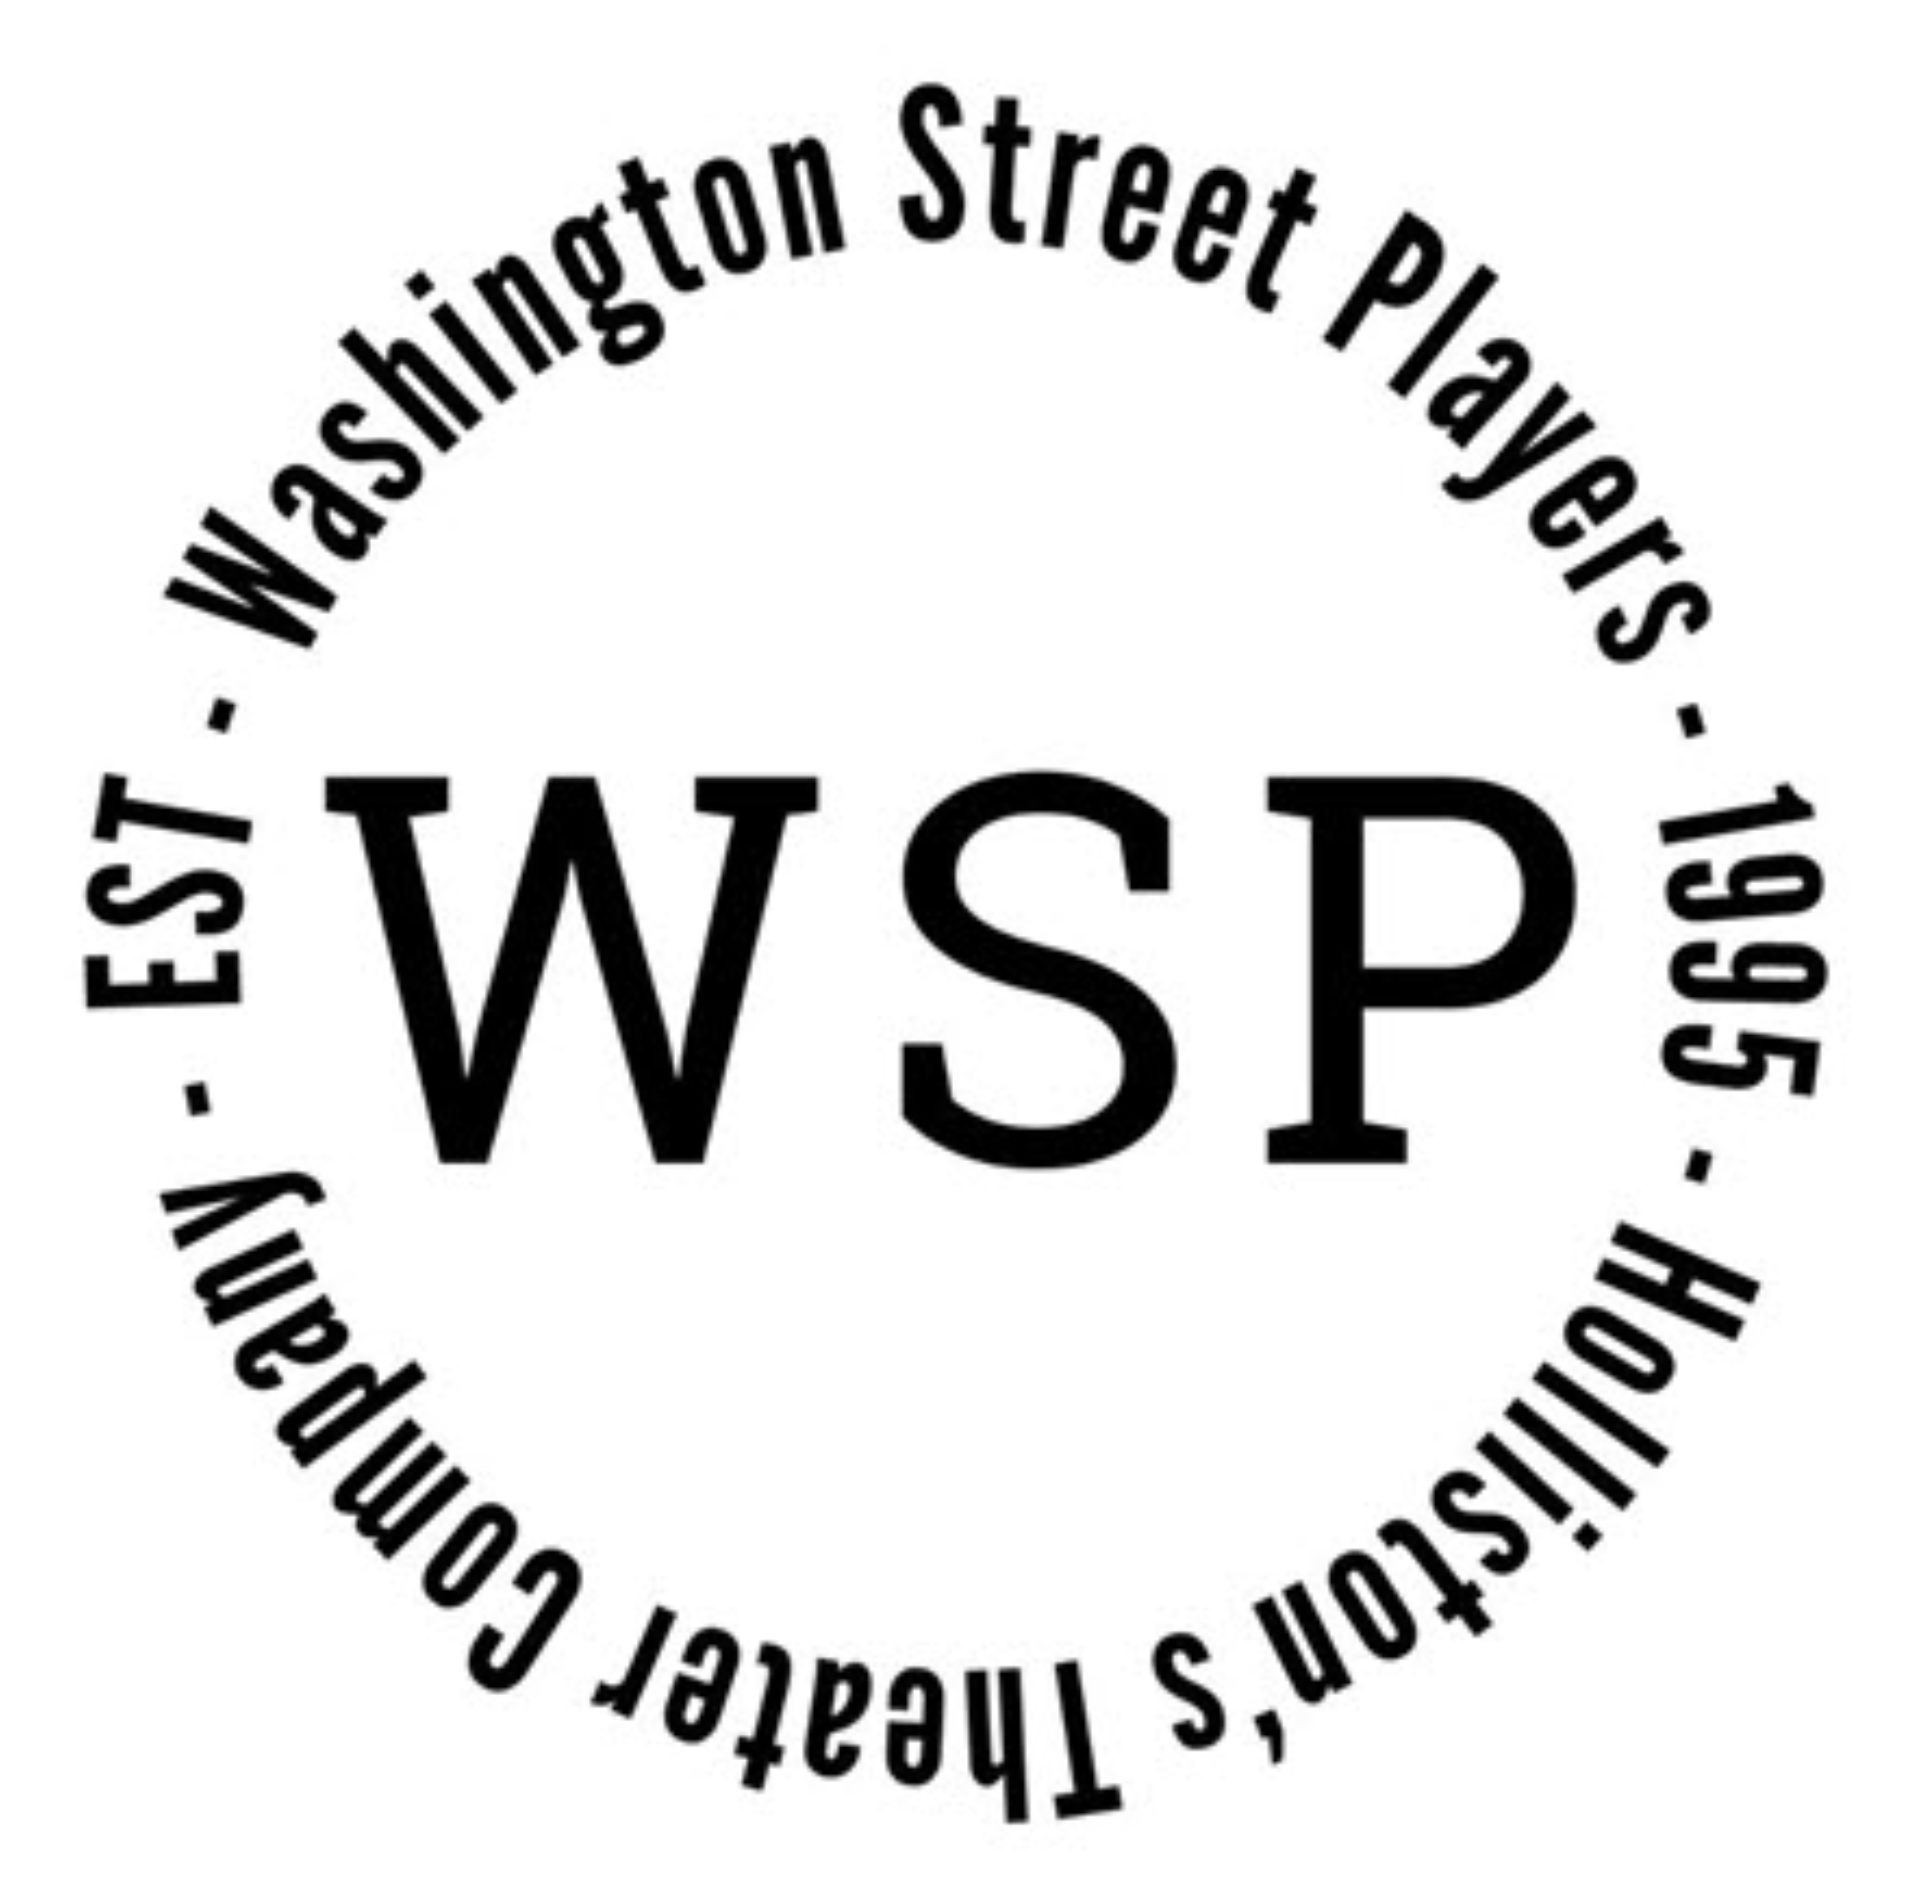 Washington Street Players